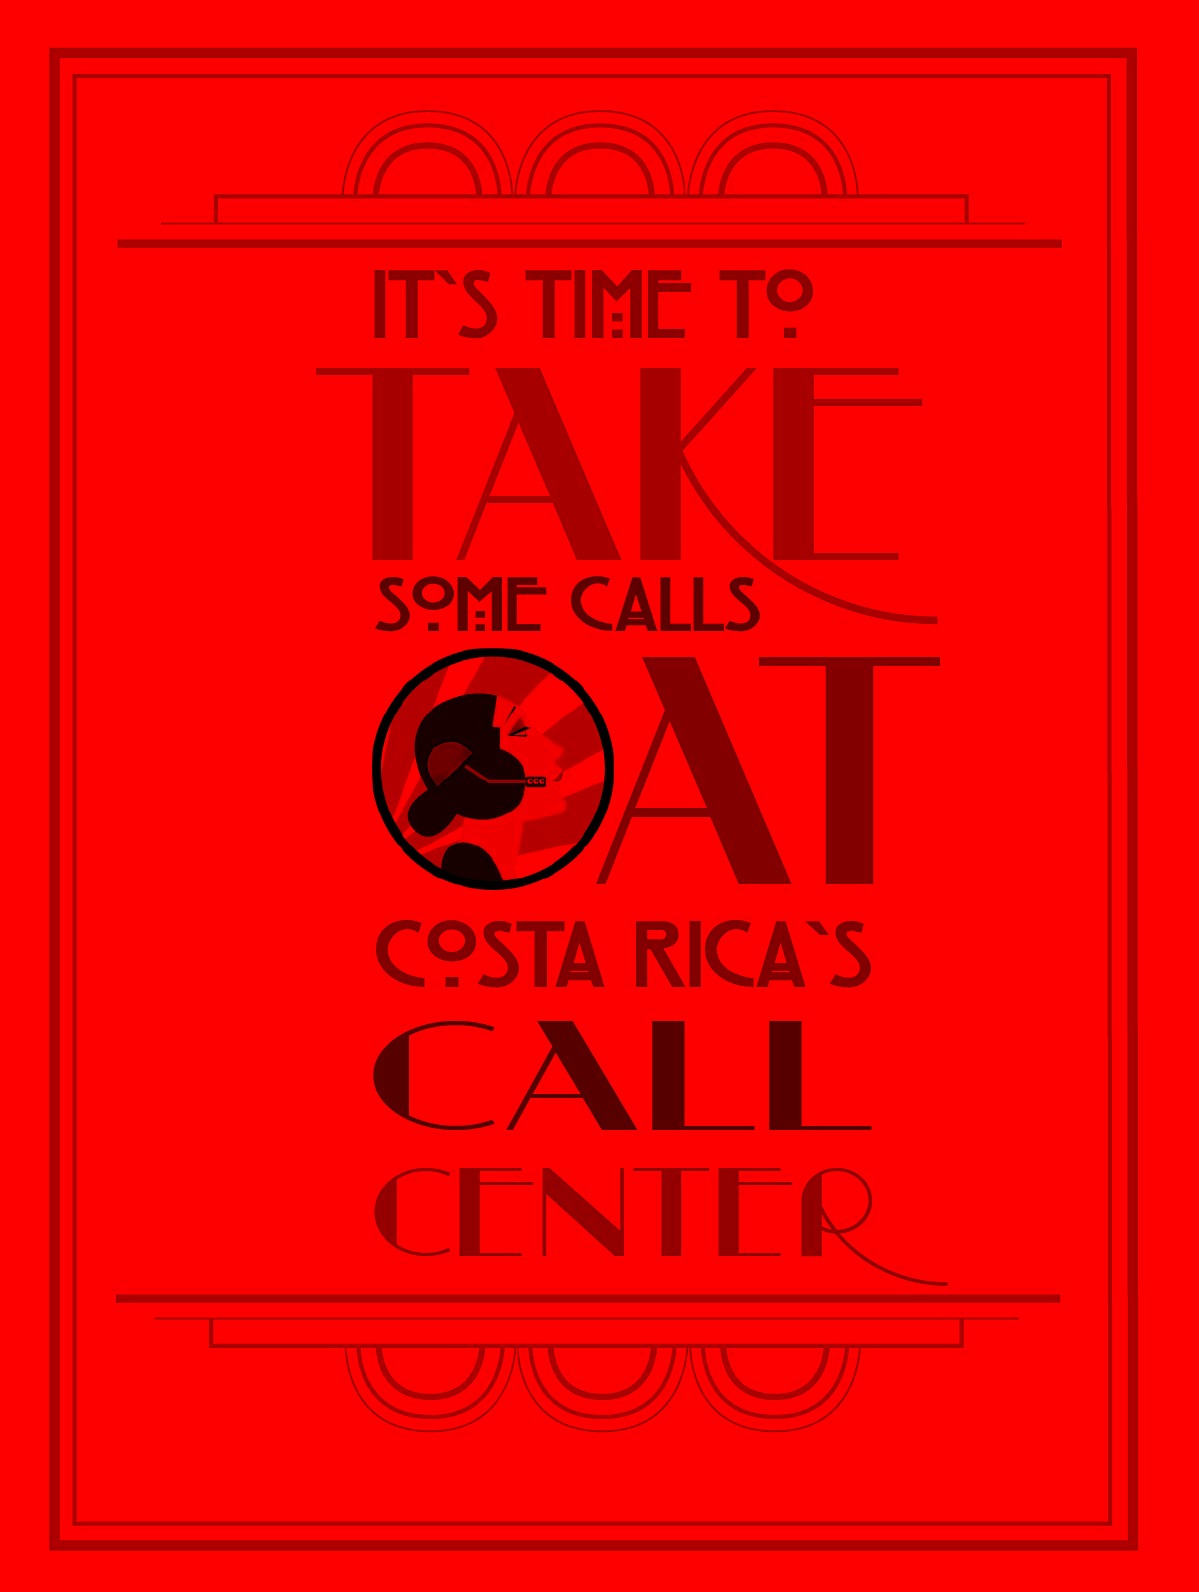 COLD CALL CYCLE COSTA RICA.jpg  by richardblank